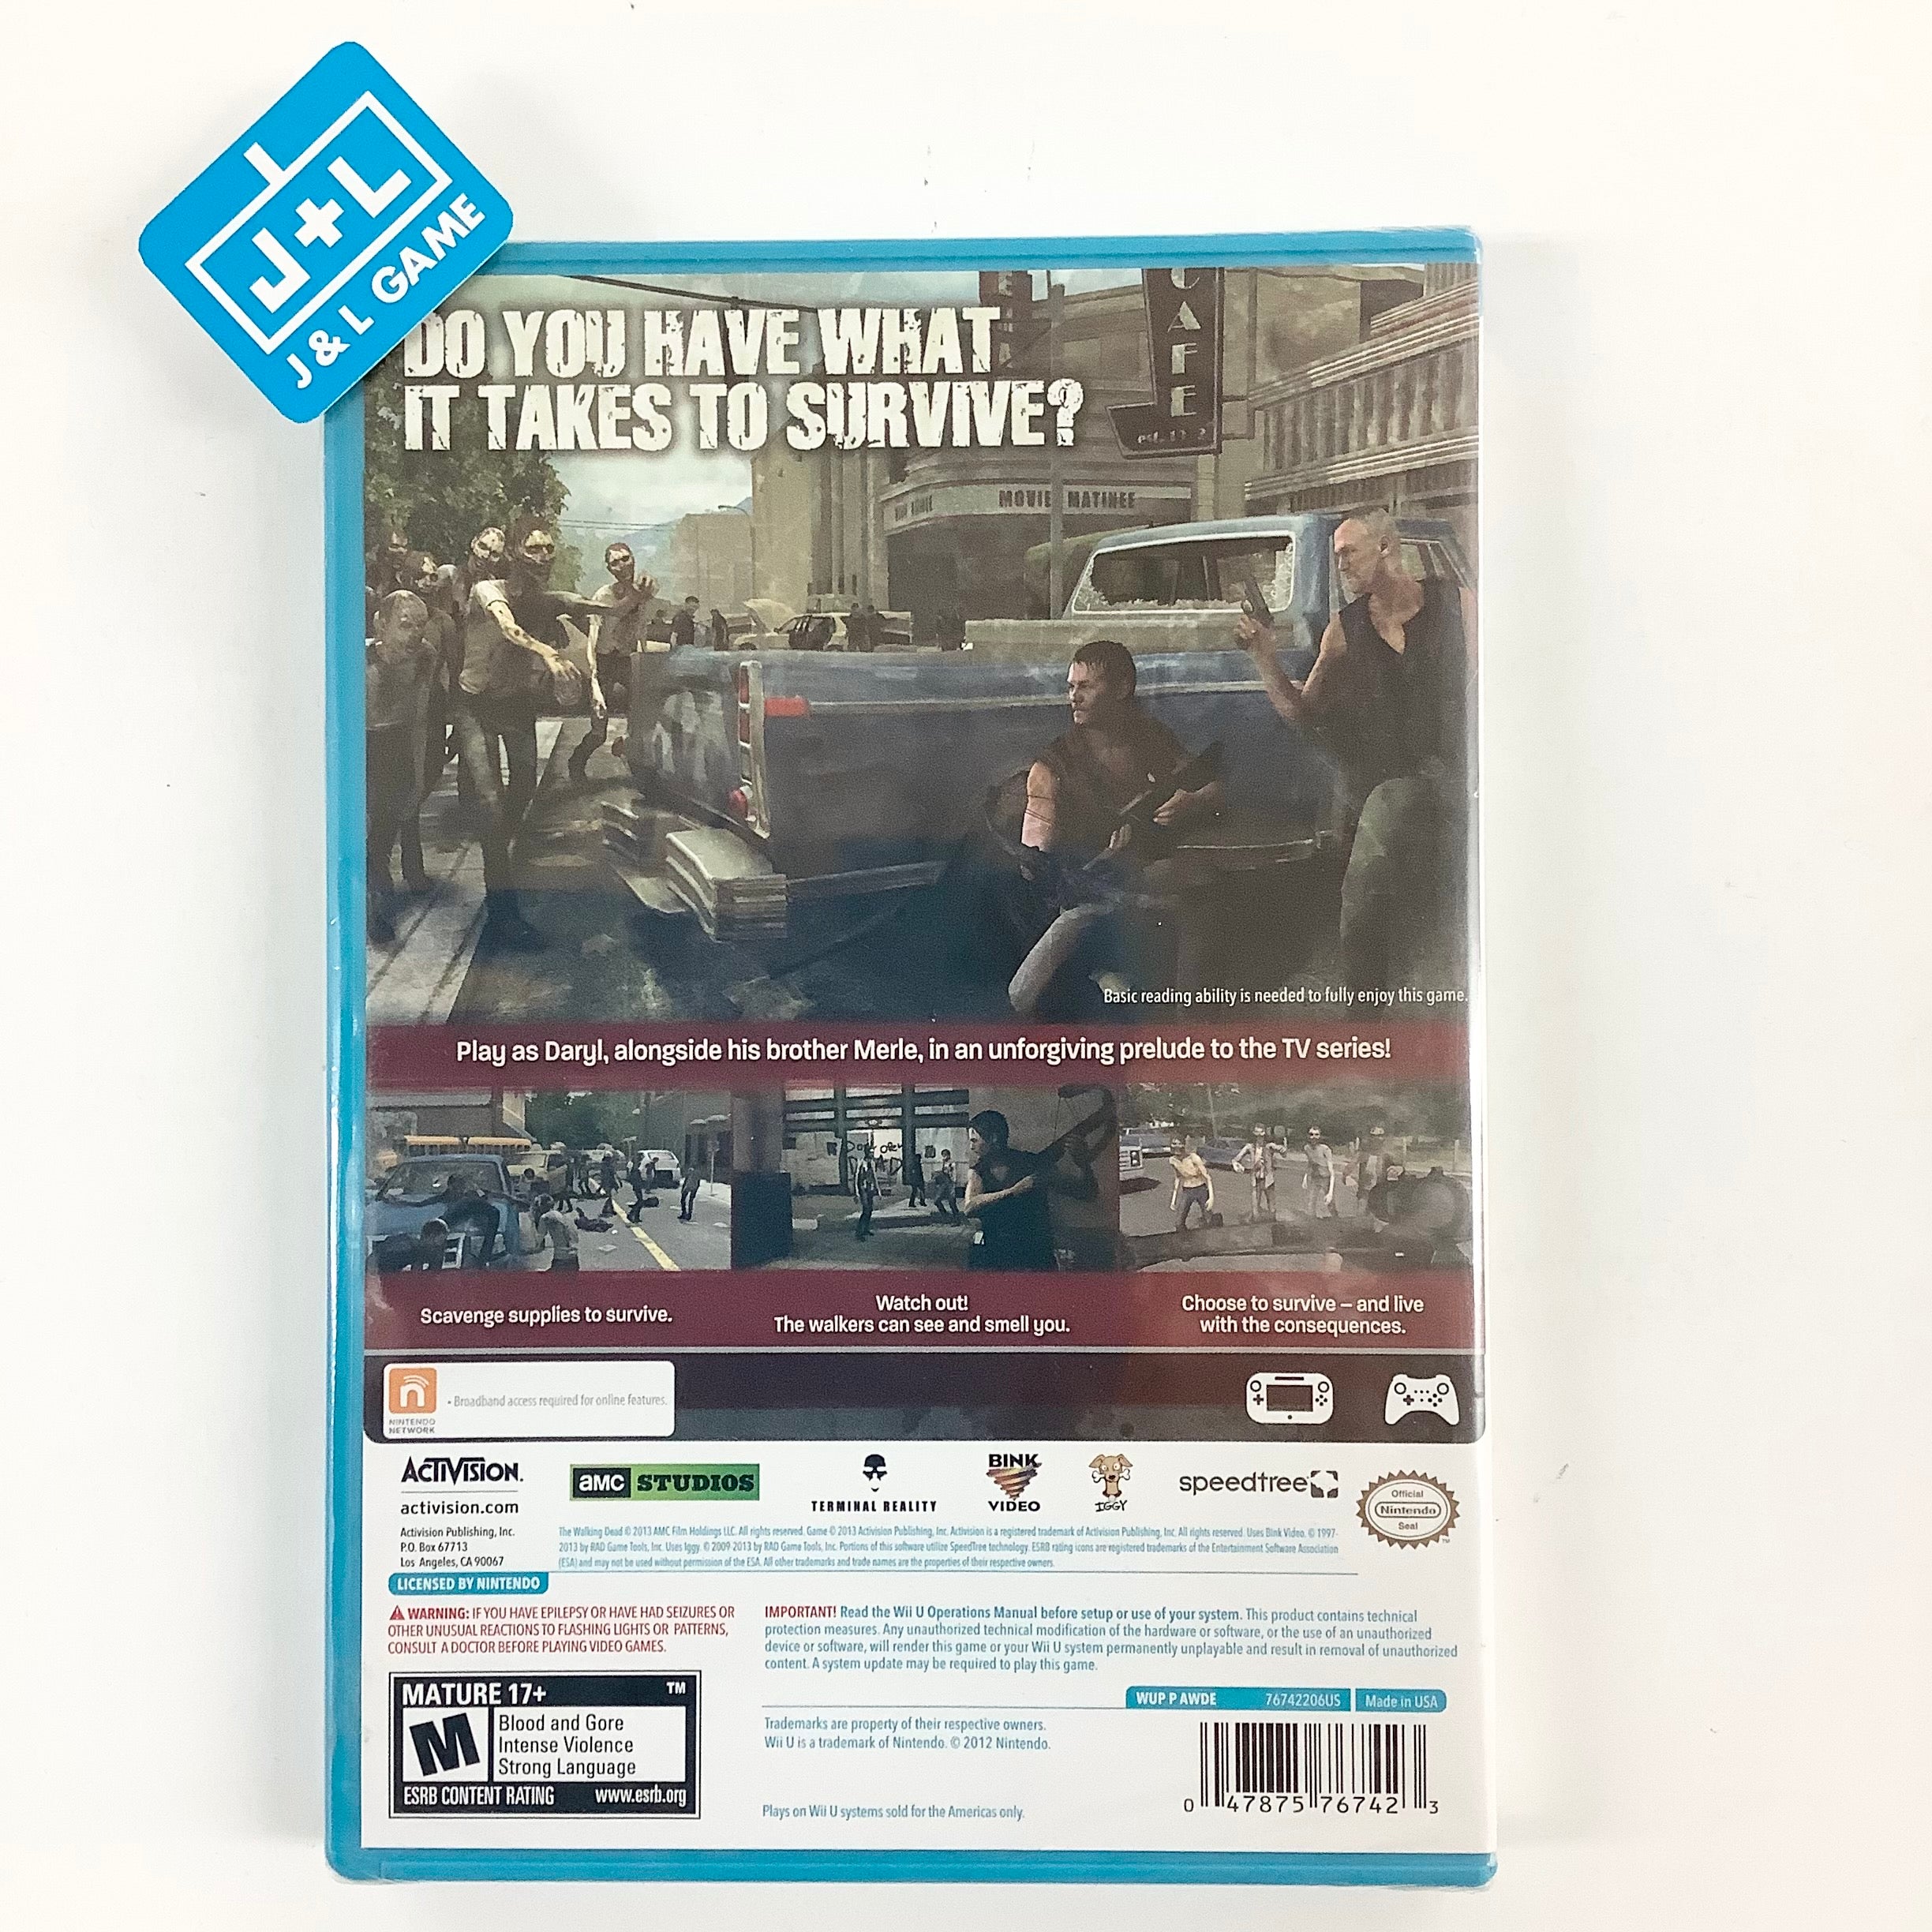 The Walking Dead: Survival Instinct - Nintendo Wii U Video Games Activision   